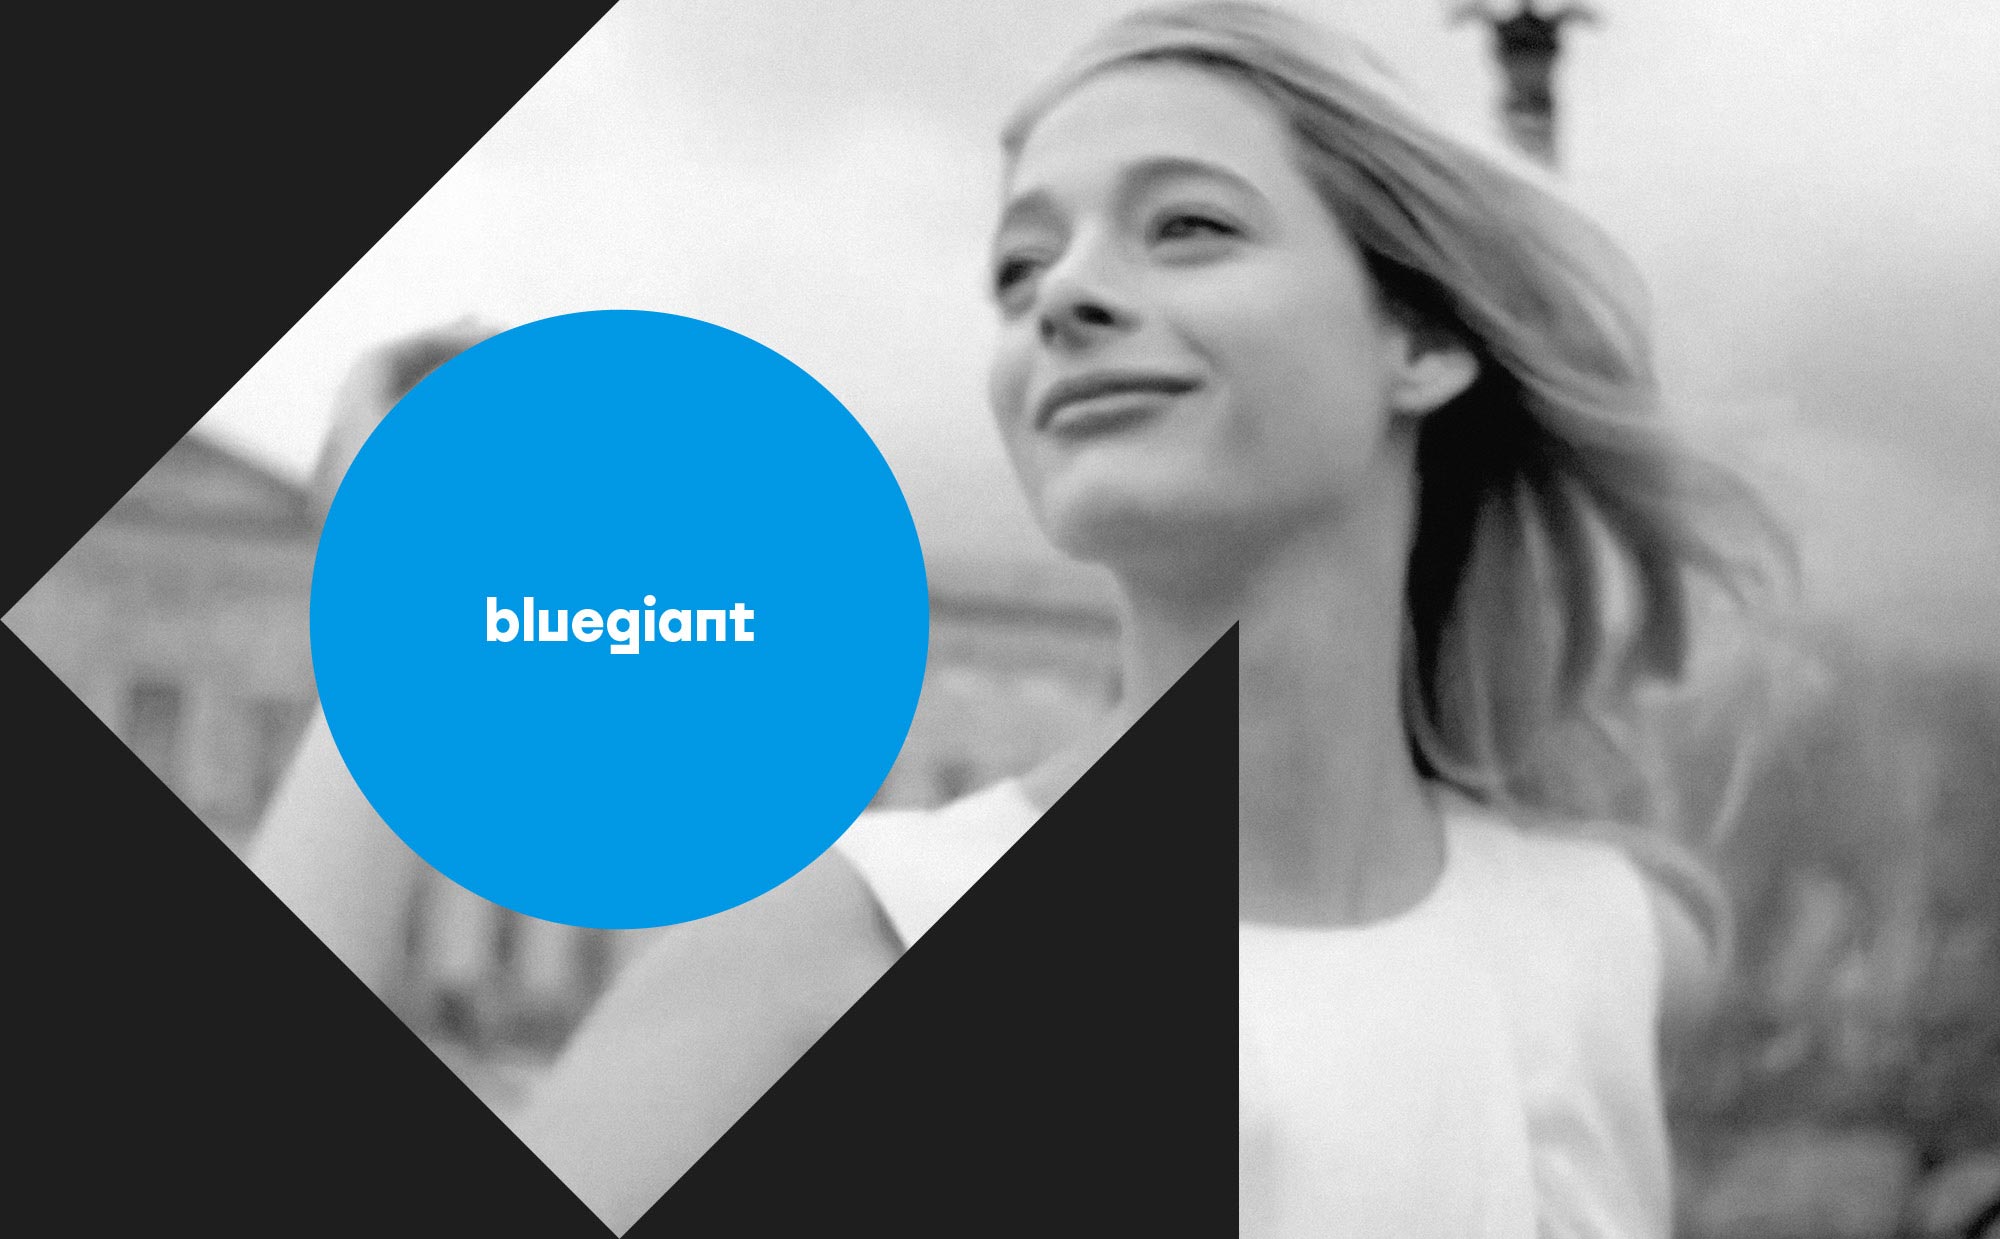 bluegiant logo motif overlaps black and white women image